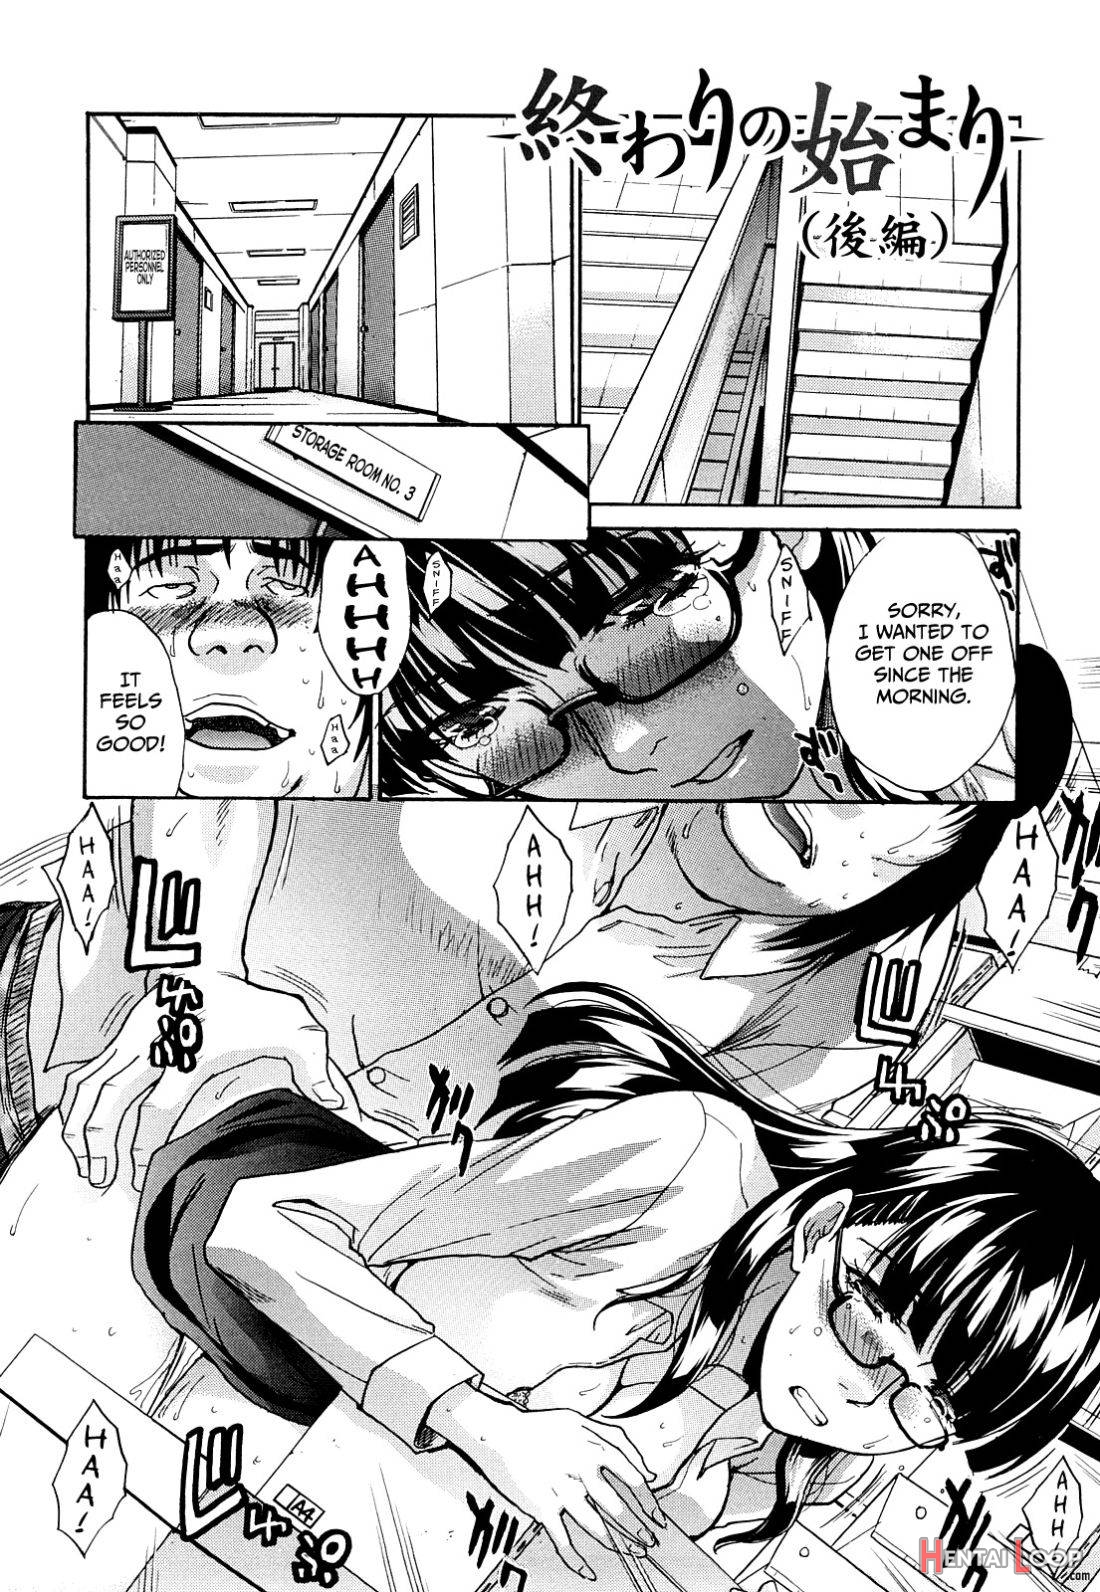 Owari no Hajimari page 26